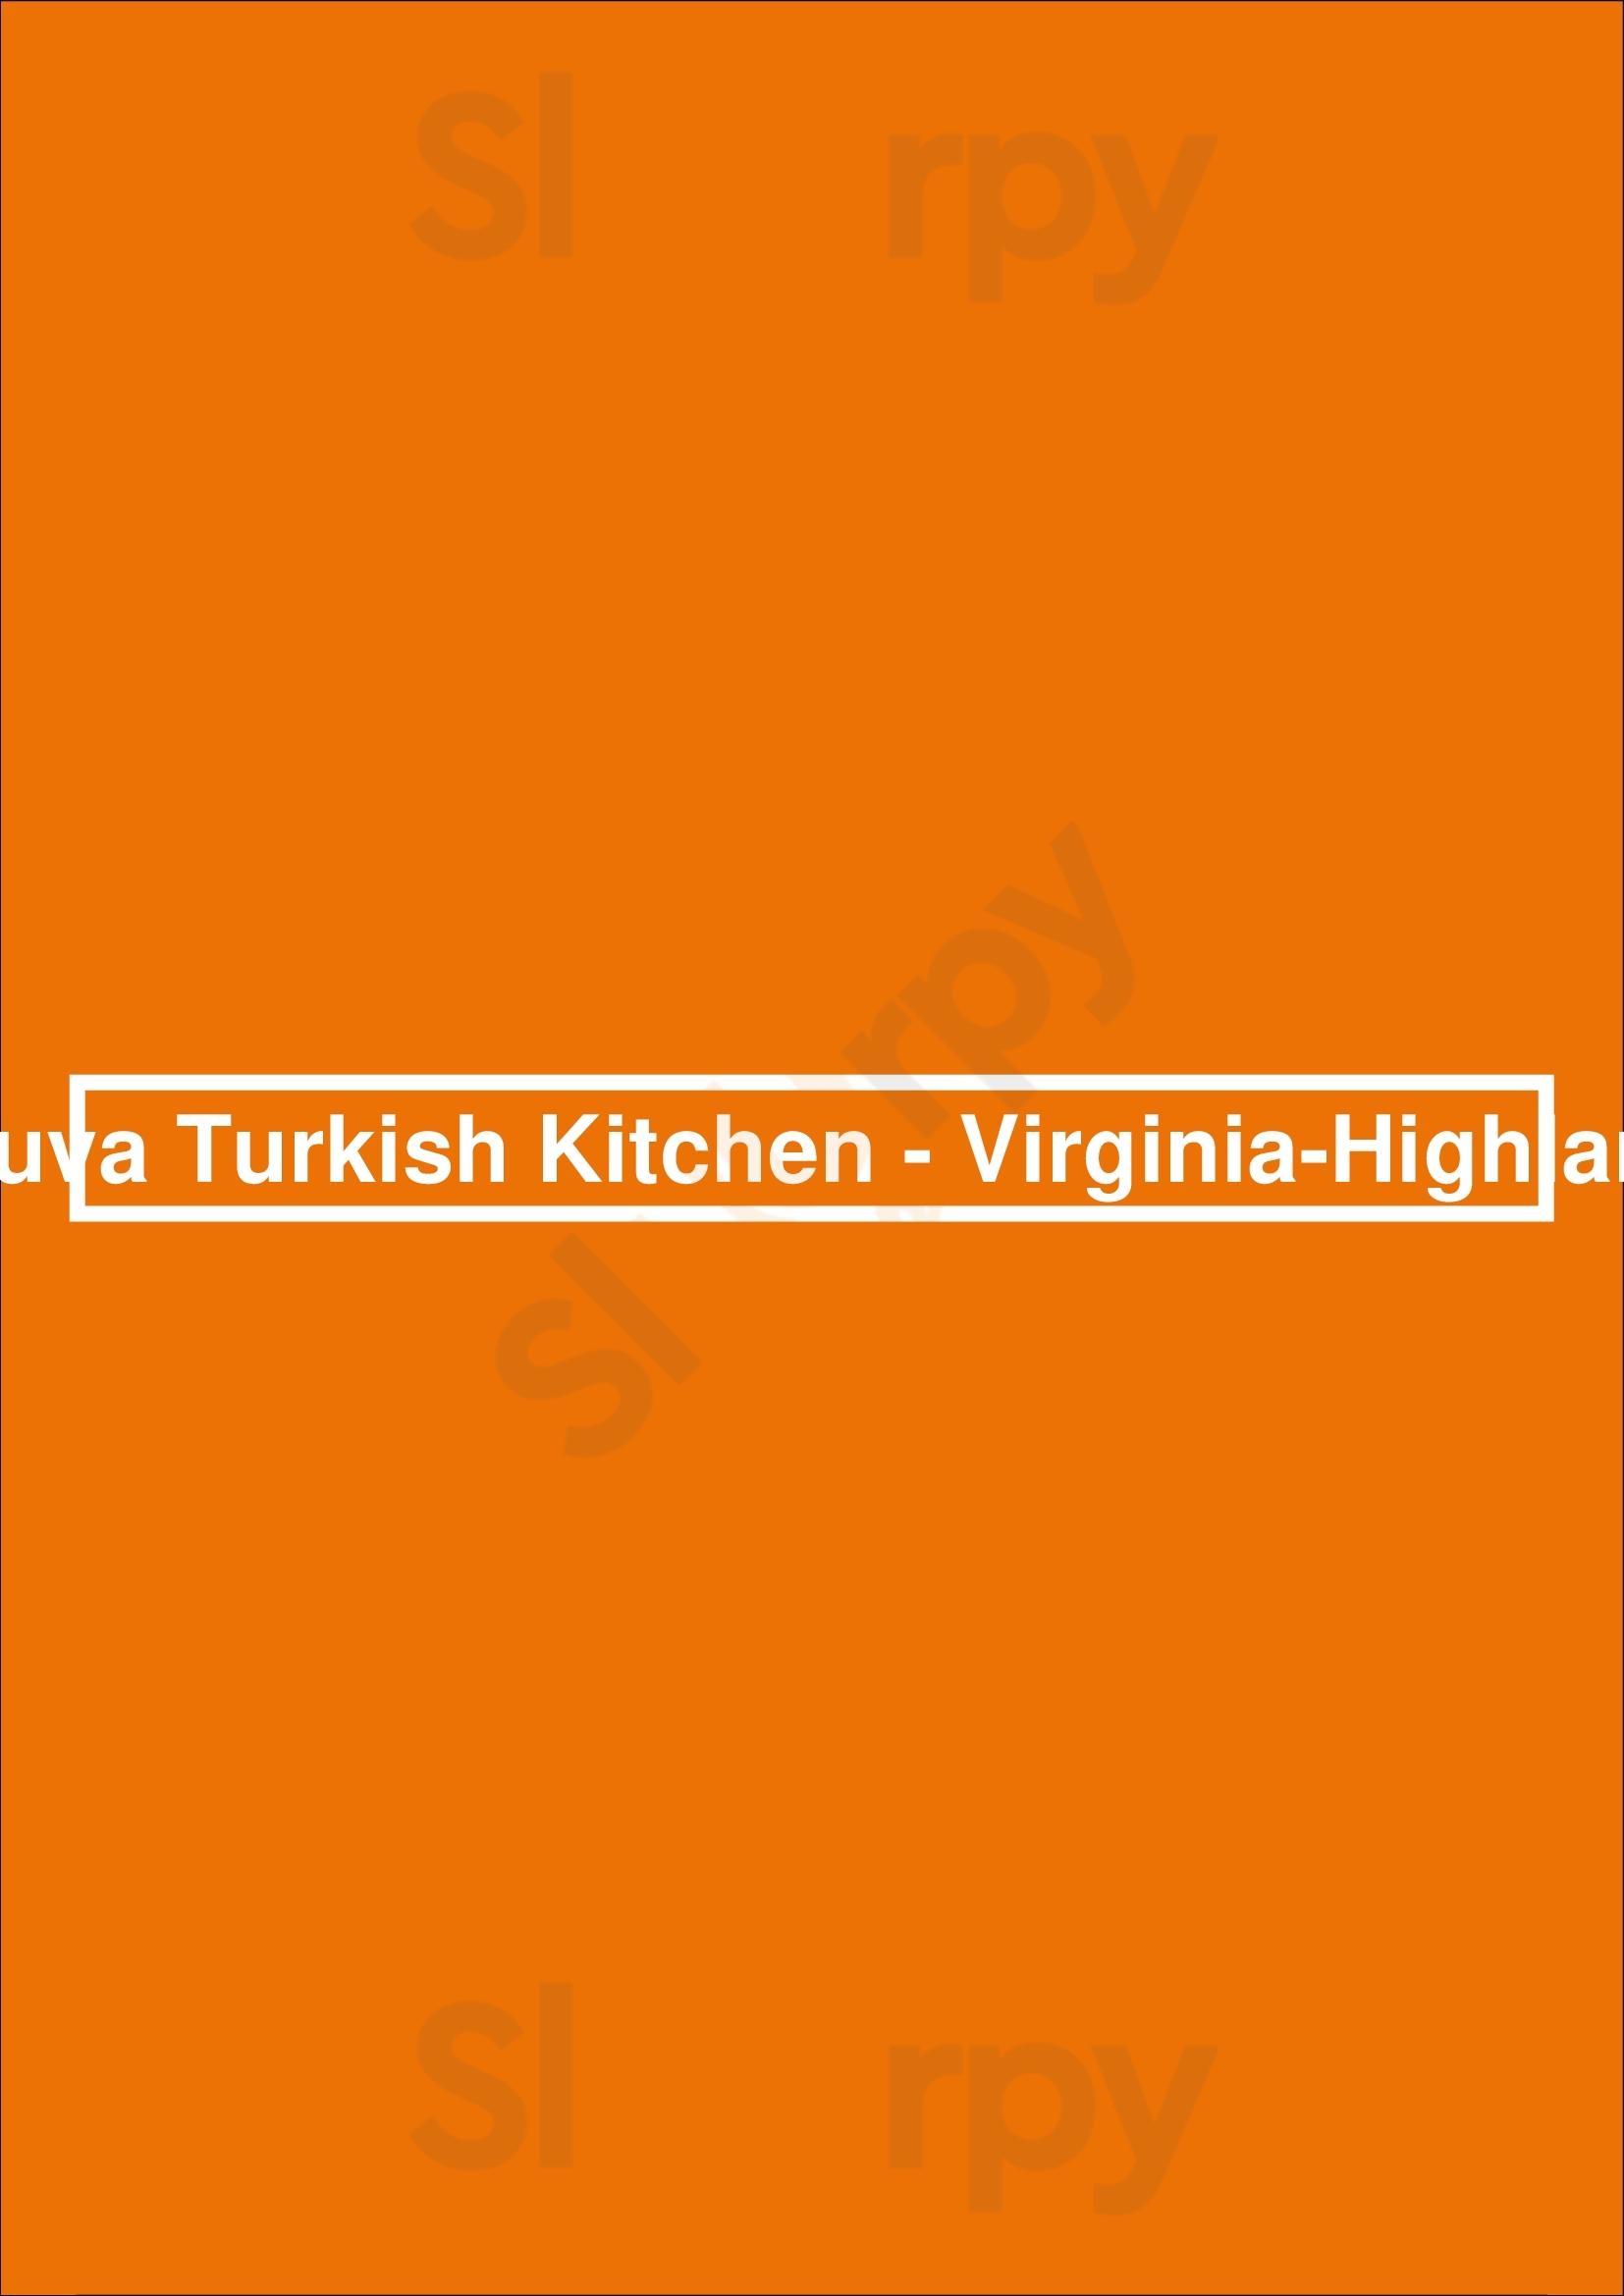 Truva Turkish Kitchen - Virginia-highland Atlanta Menu - 1